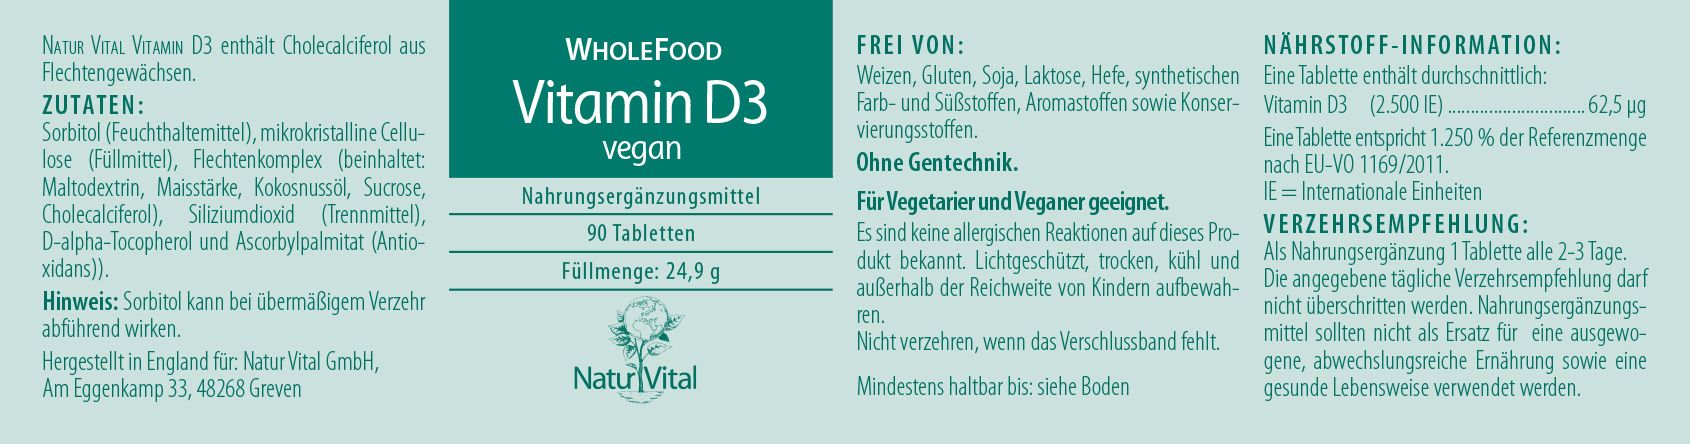 Vitamin D3 vegan von Natur Vital Etikett